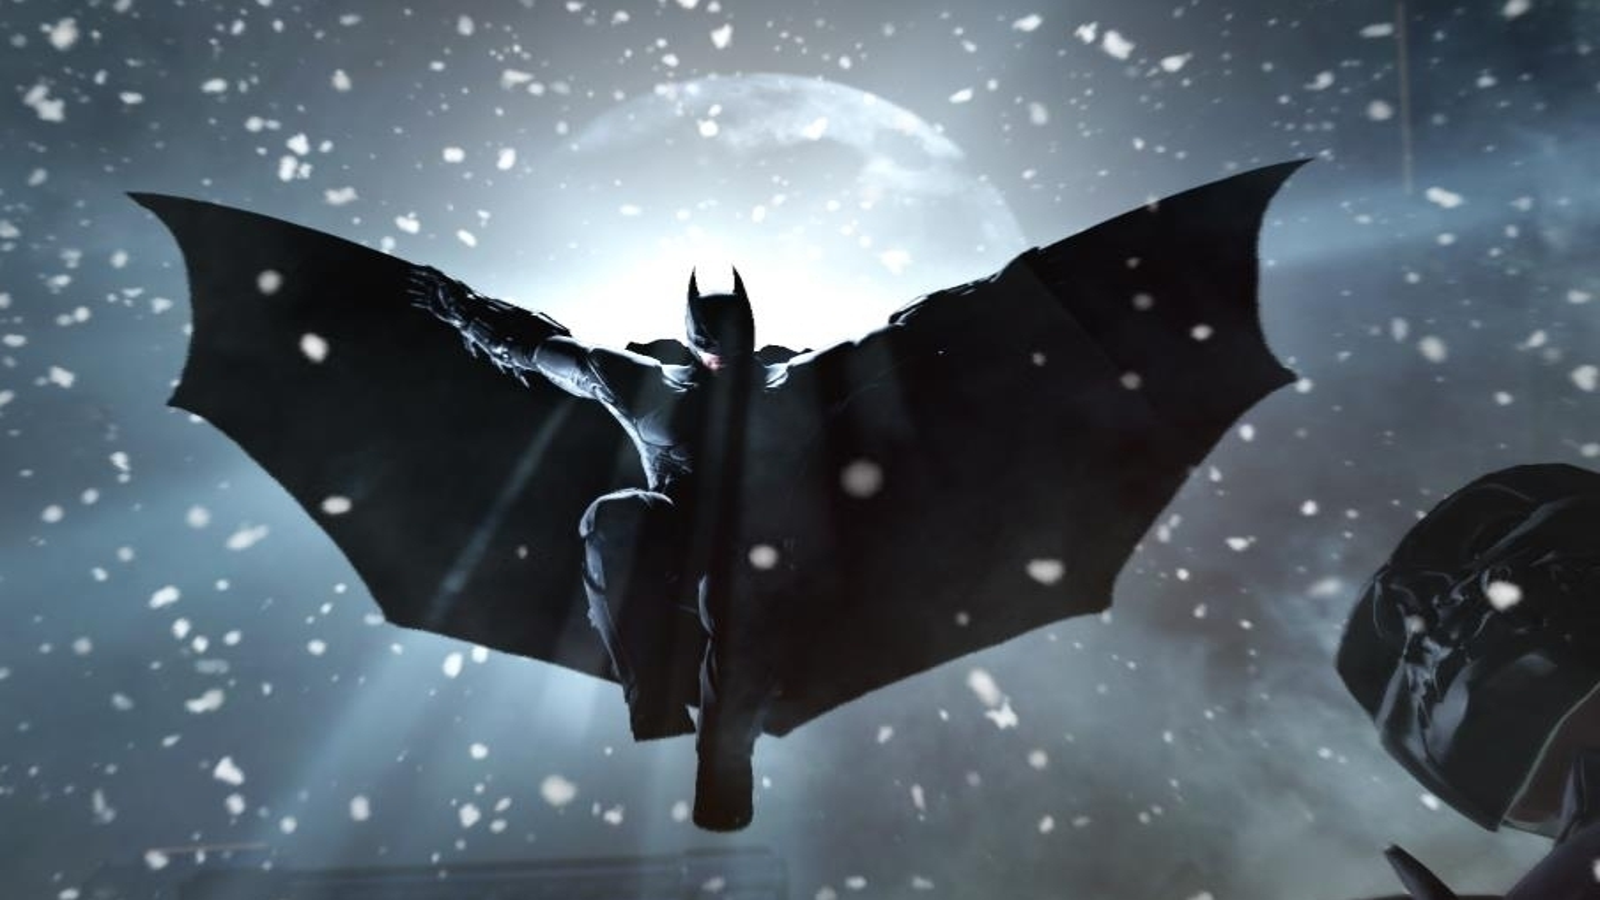 Comprar Batman: Arkham City Origins - Cold, Cold Heart Steam